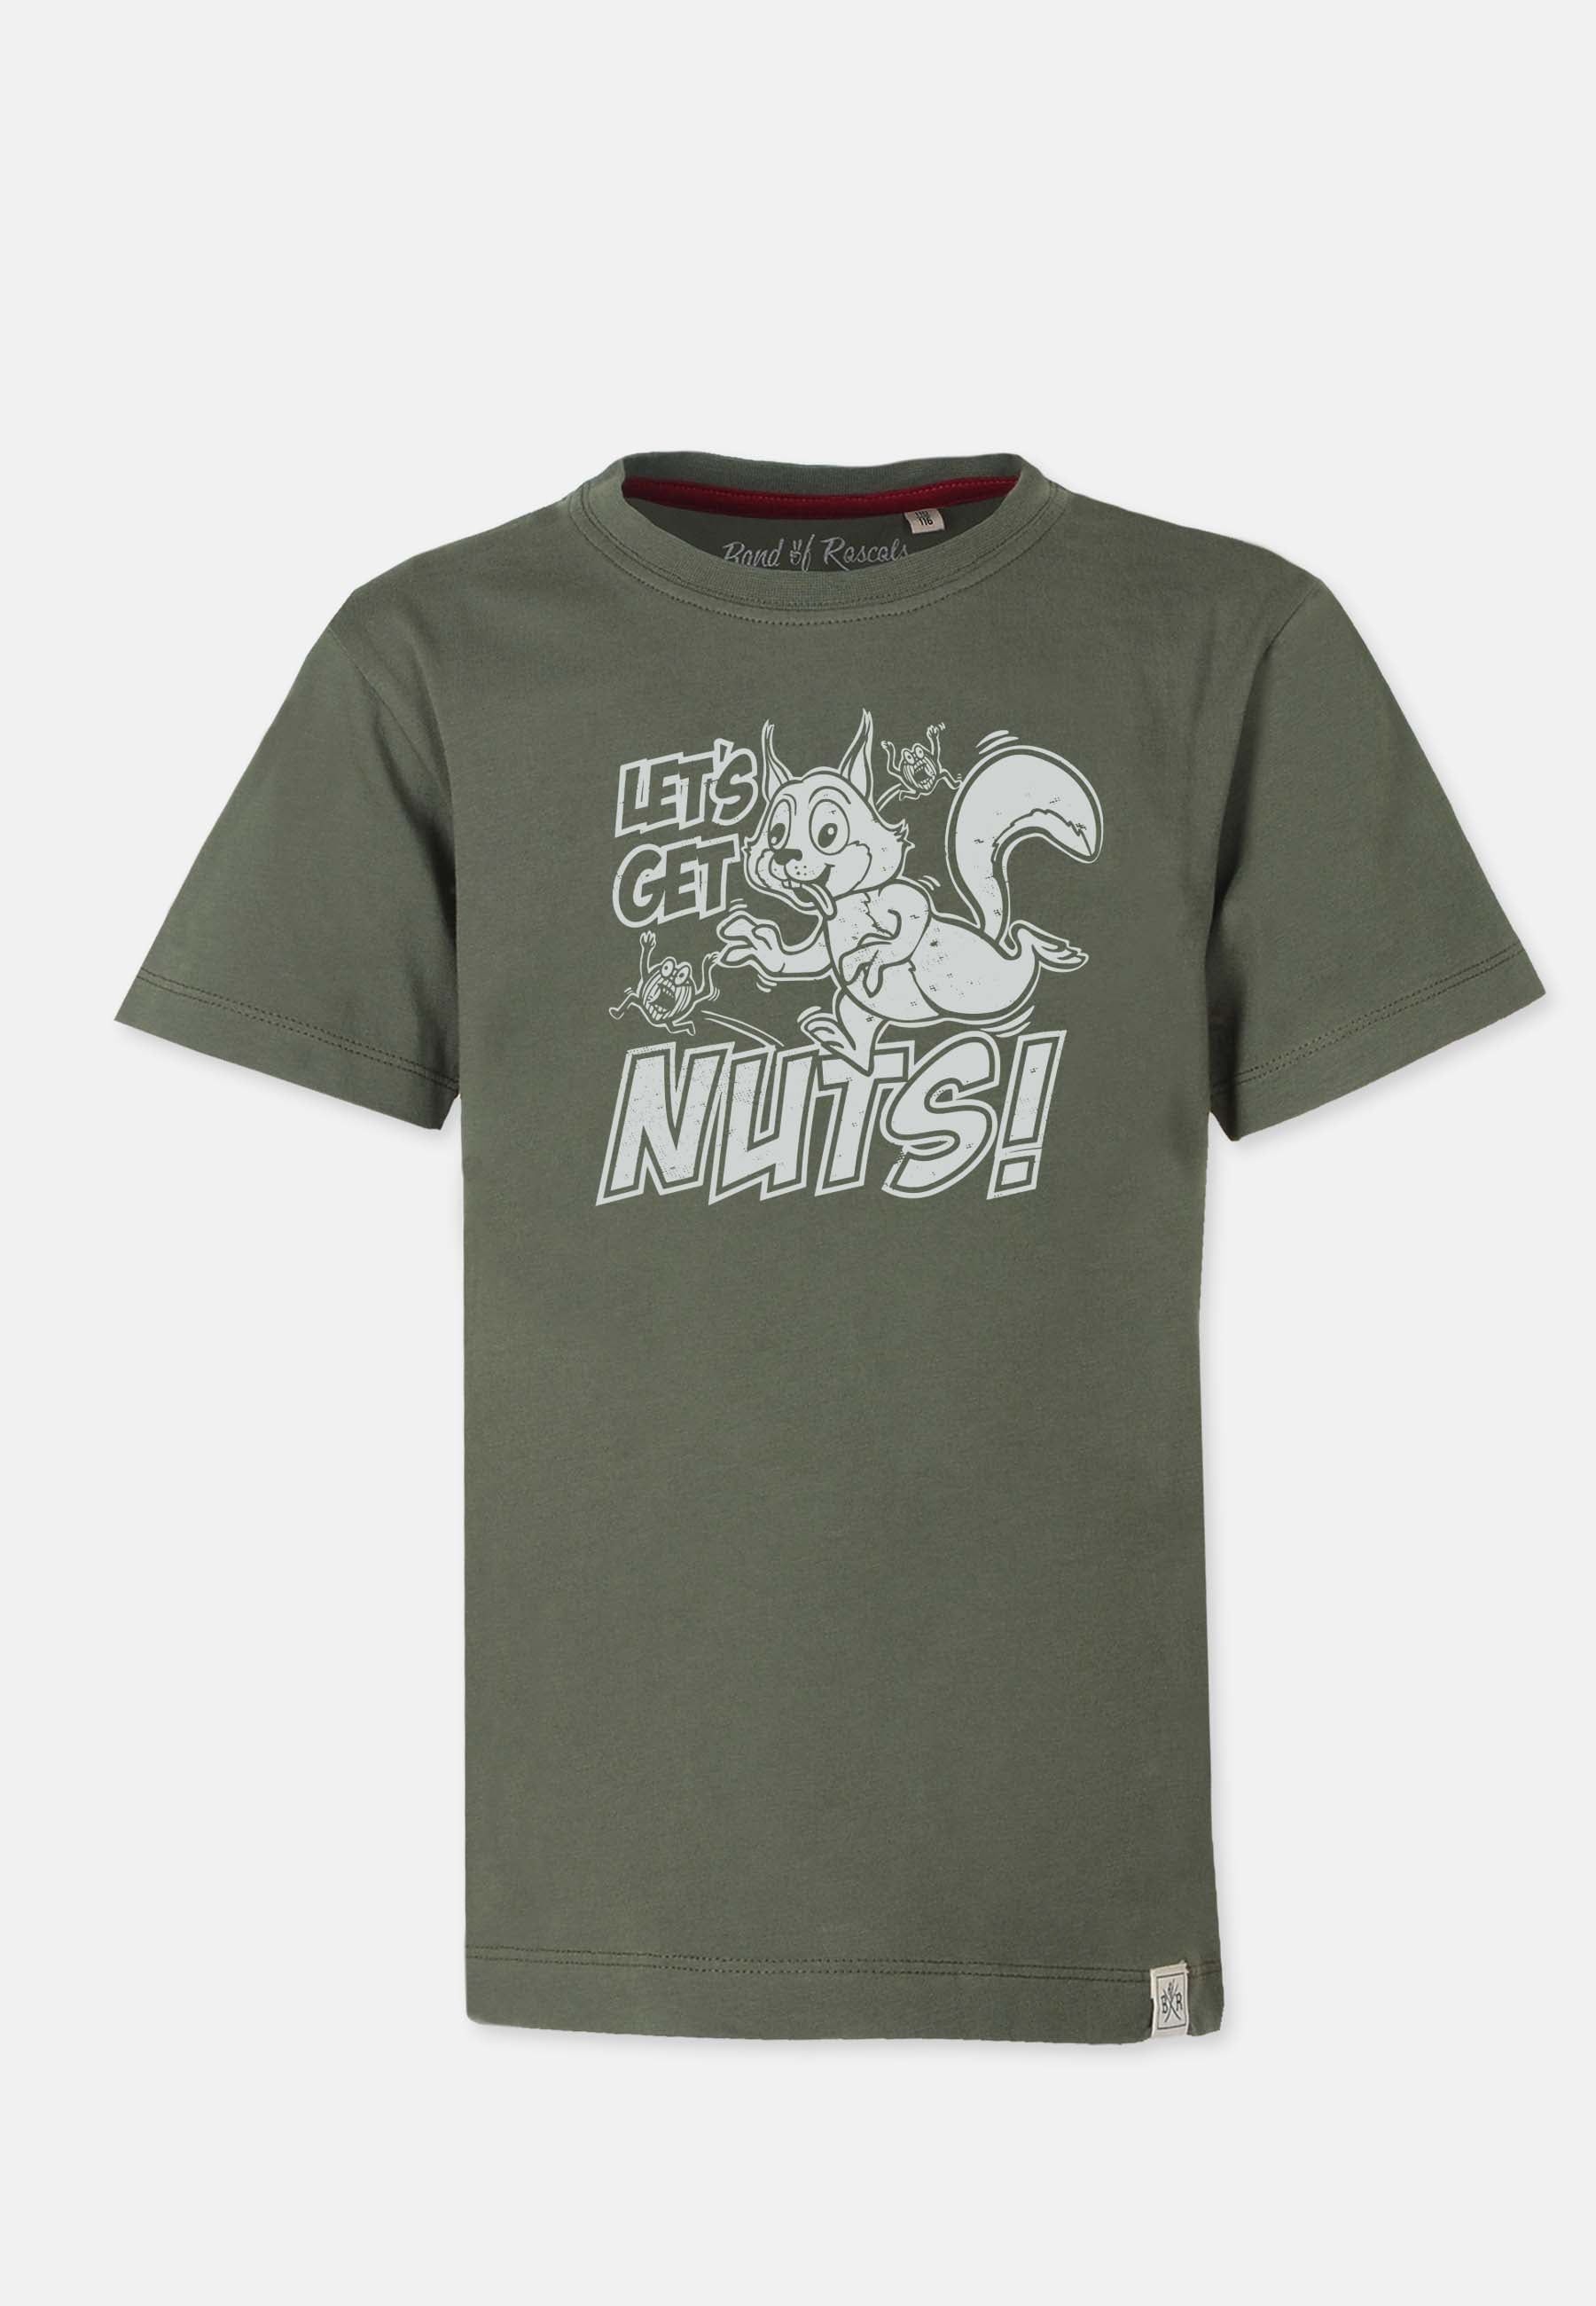 Nuts T-Shirt